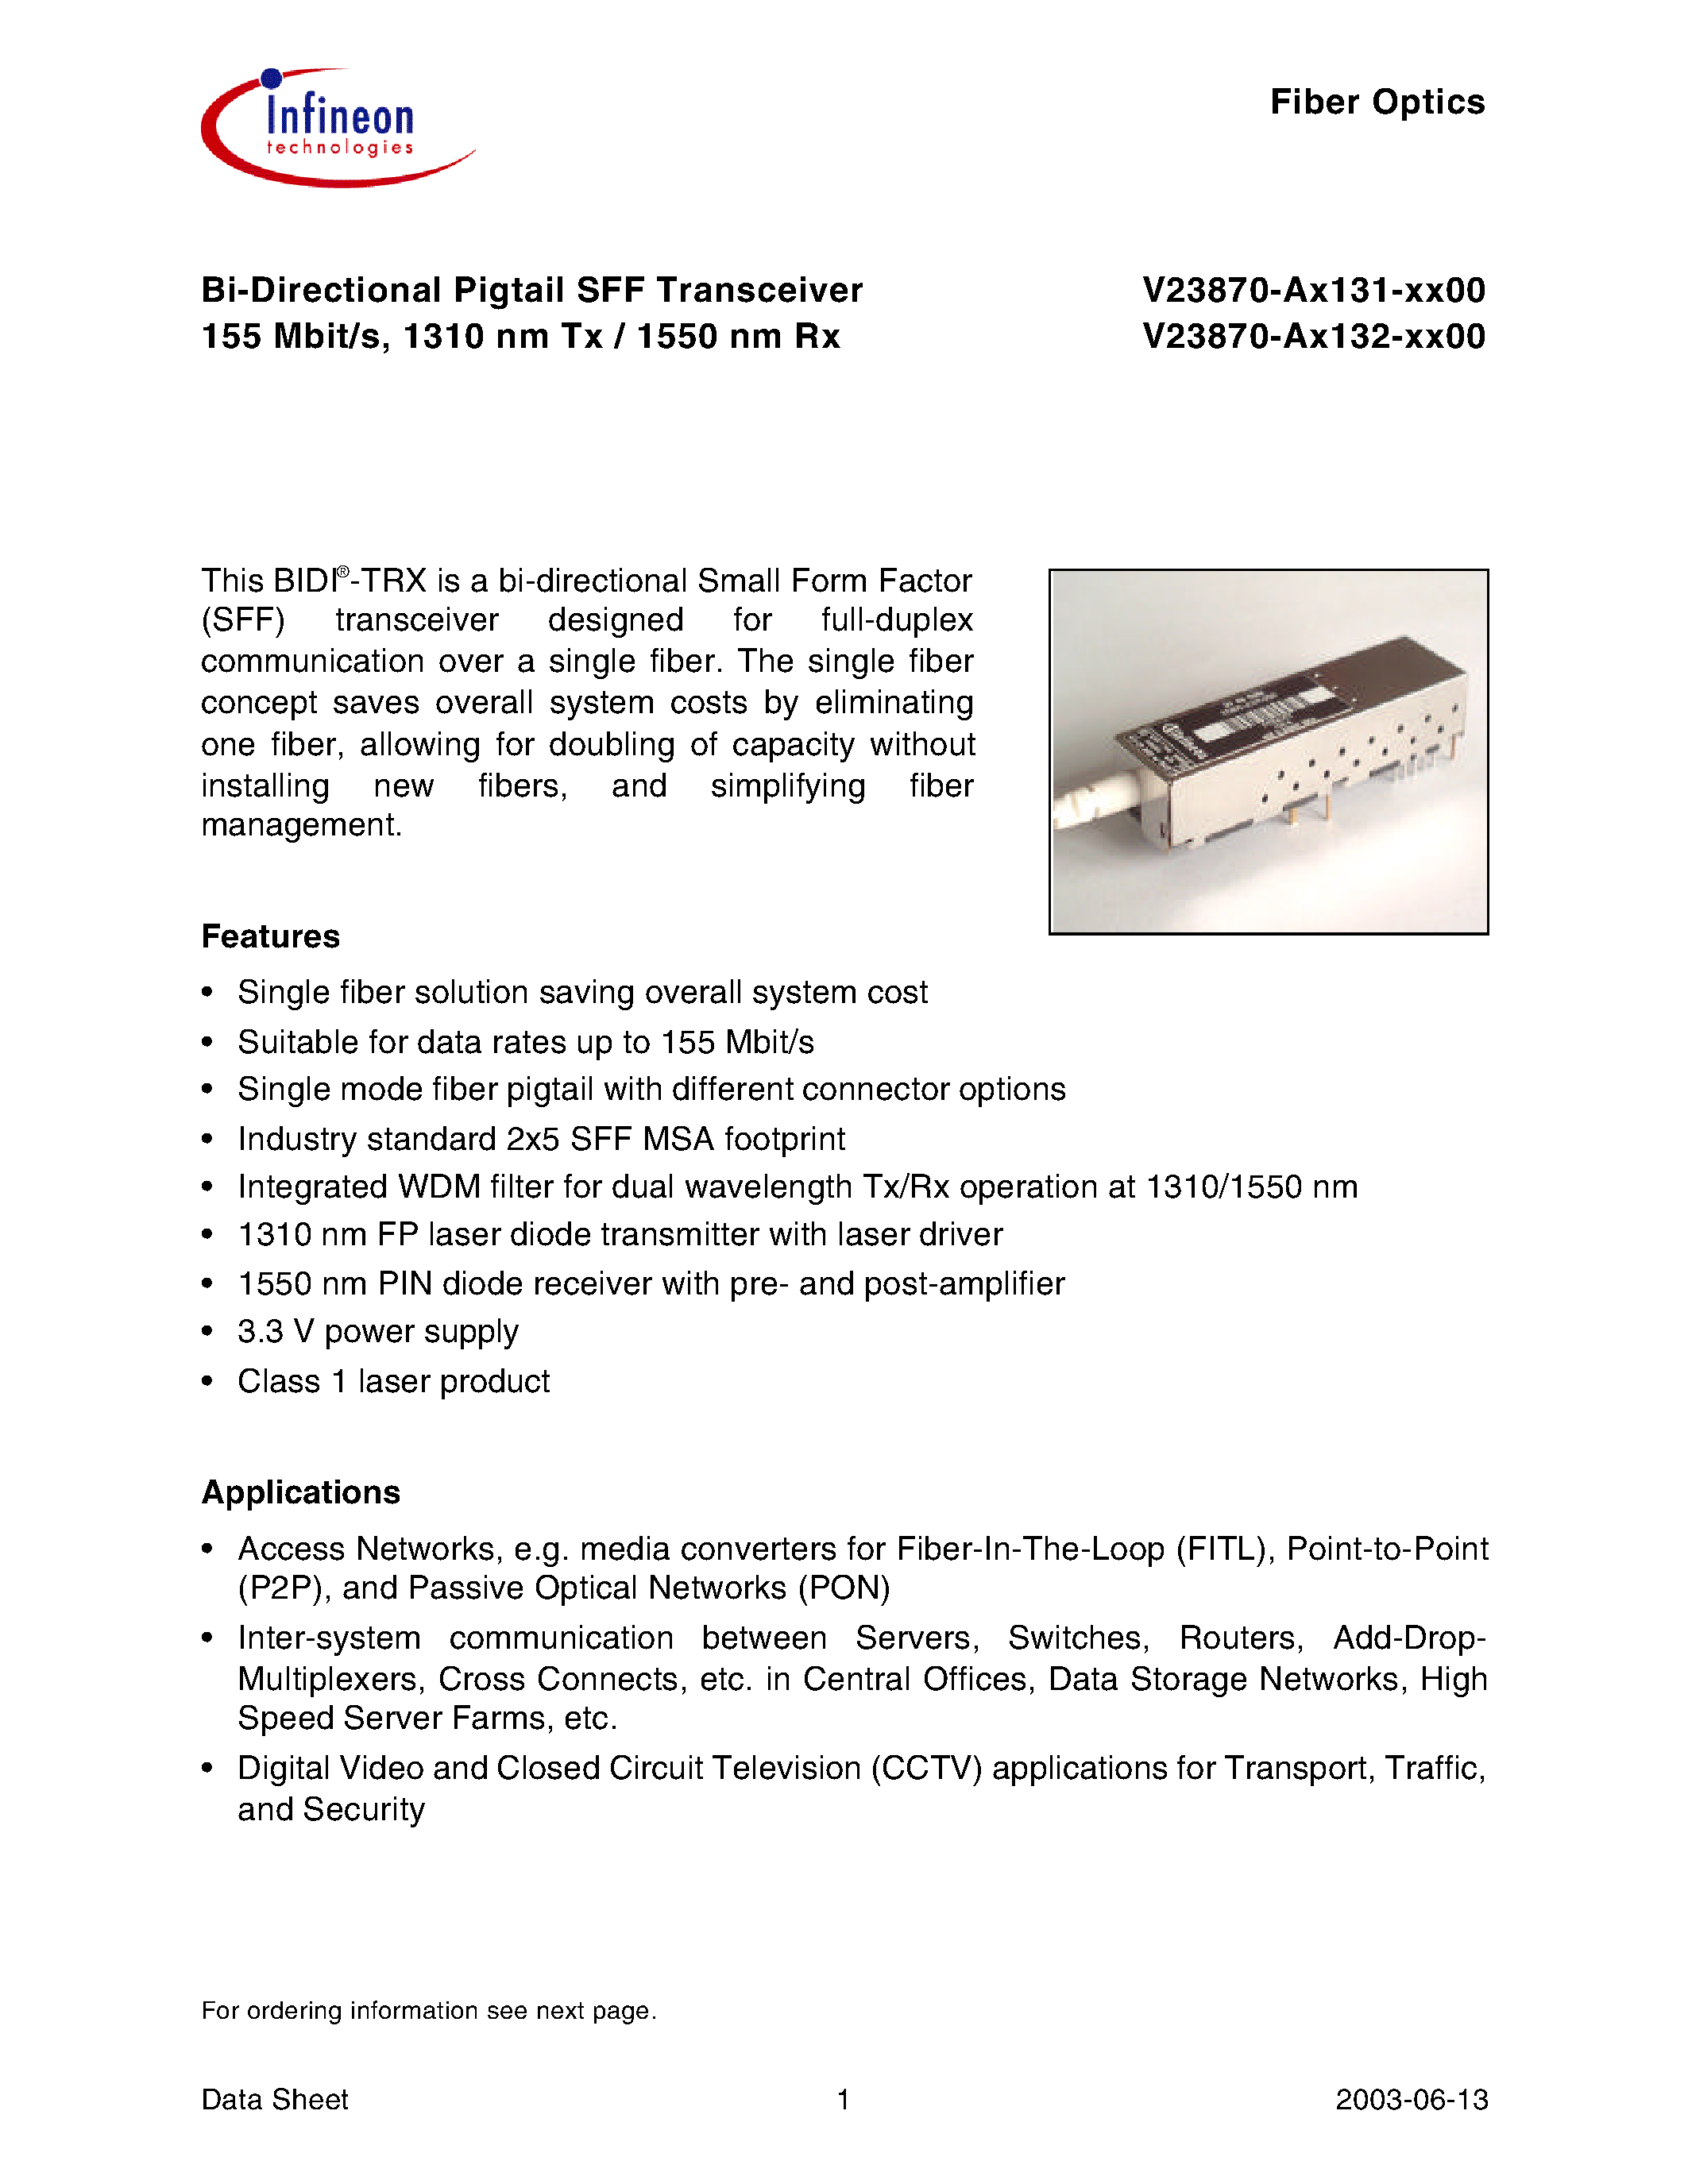 Даташит V23870-A3132-B200 - Bi-Directional Pigtail SFF Transceiver 155 Mbit/s/ 1310 nm Tx / 1550 nm Rx страница 1